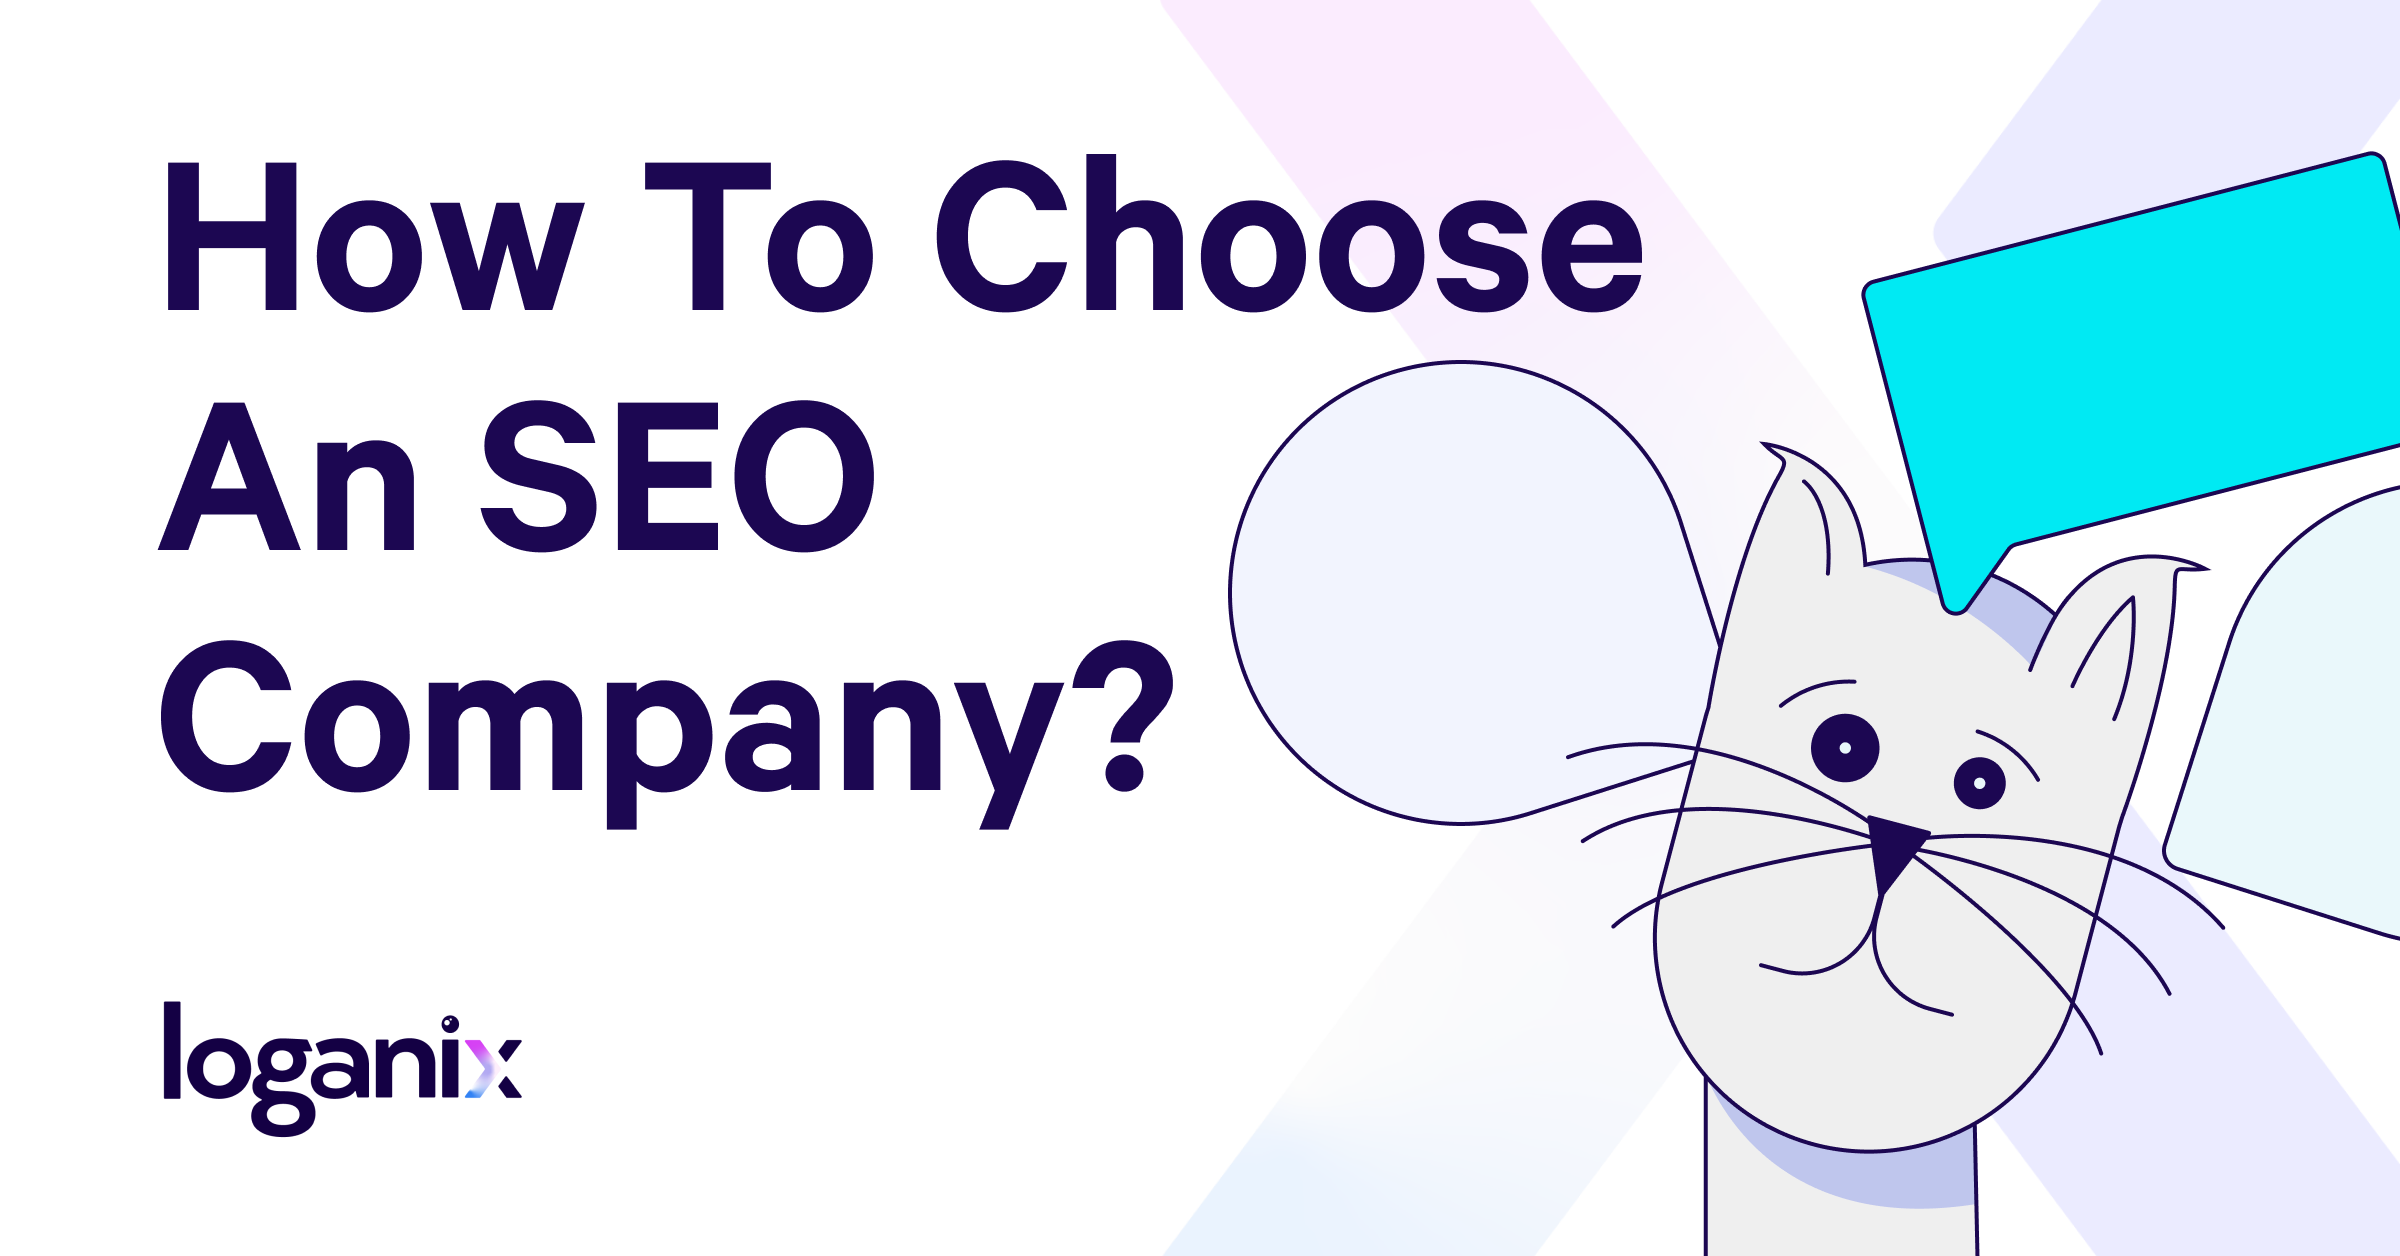 How to Choose an SEO Company?